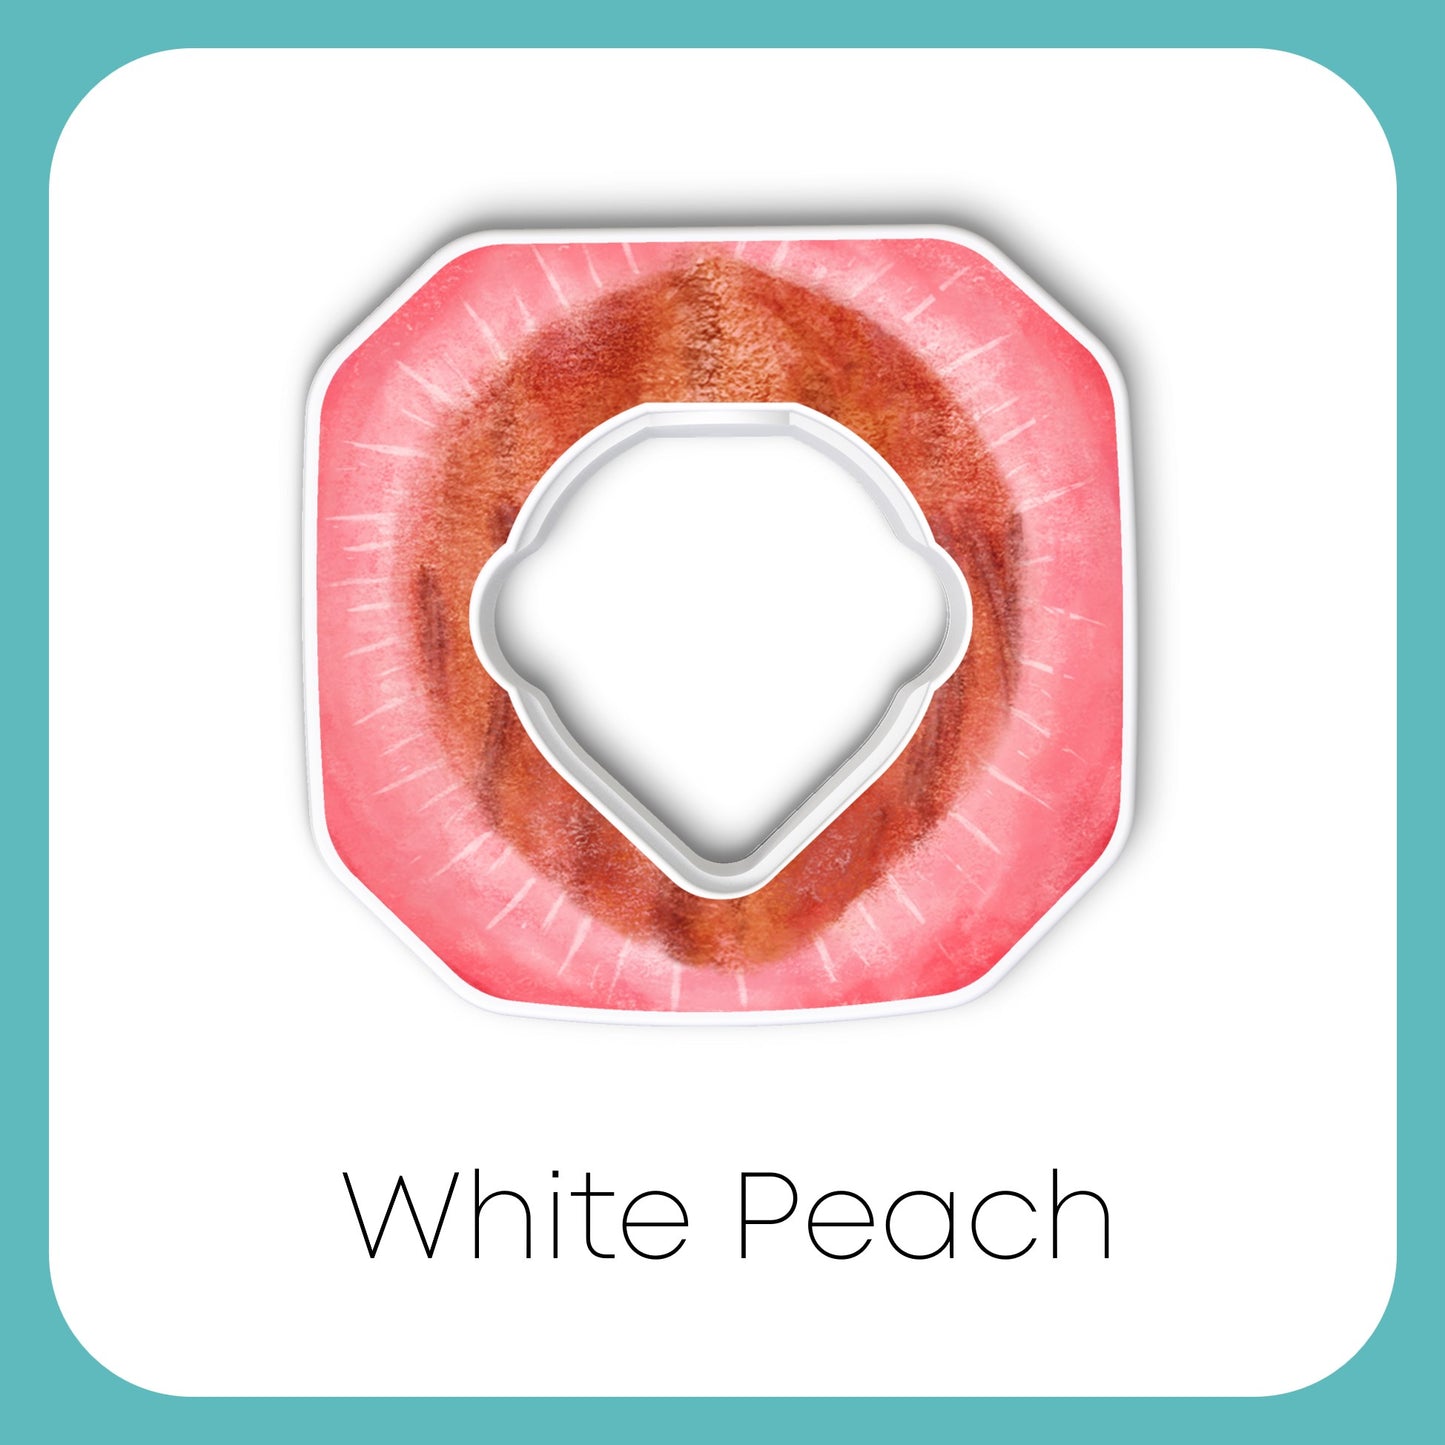 White Peach Flavor Pods